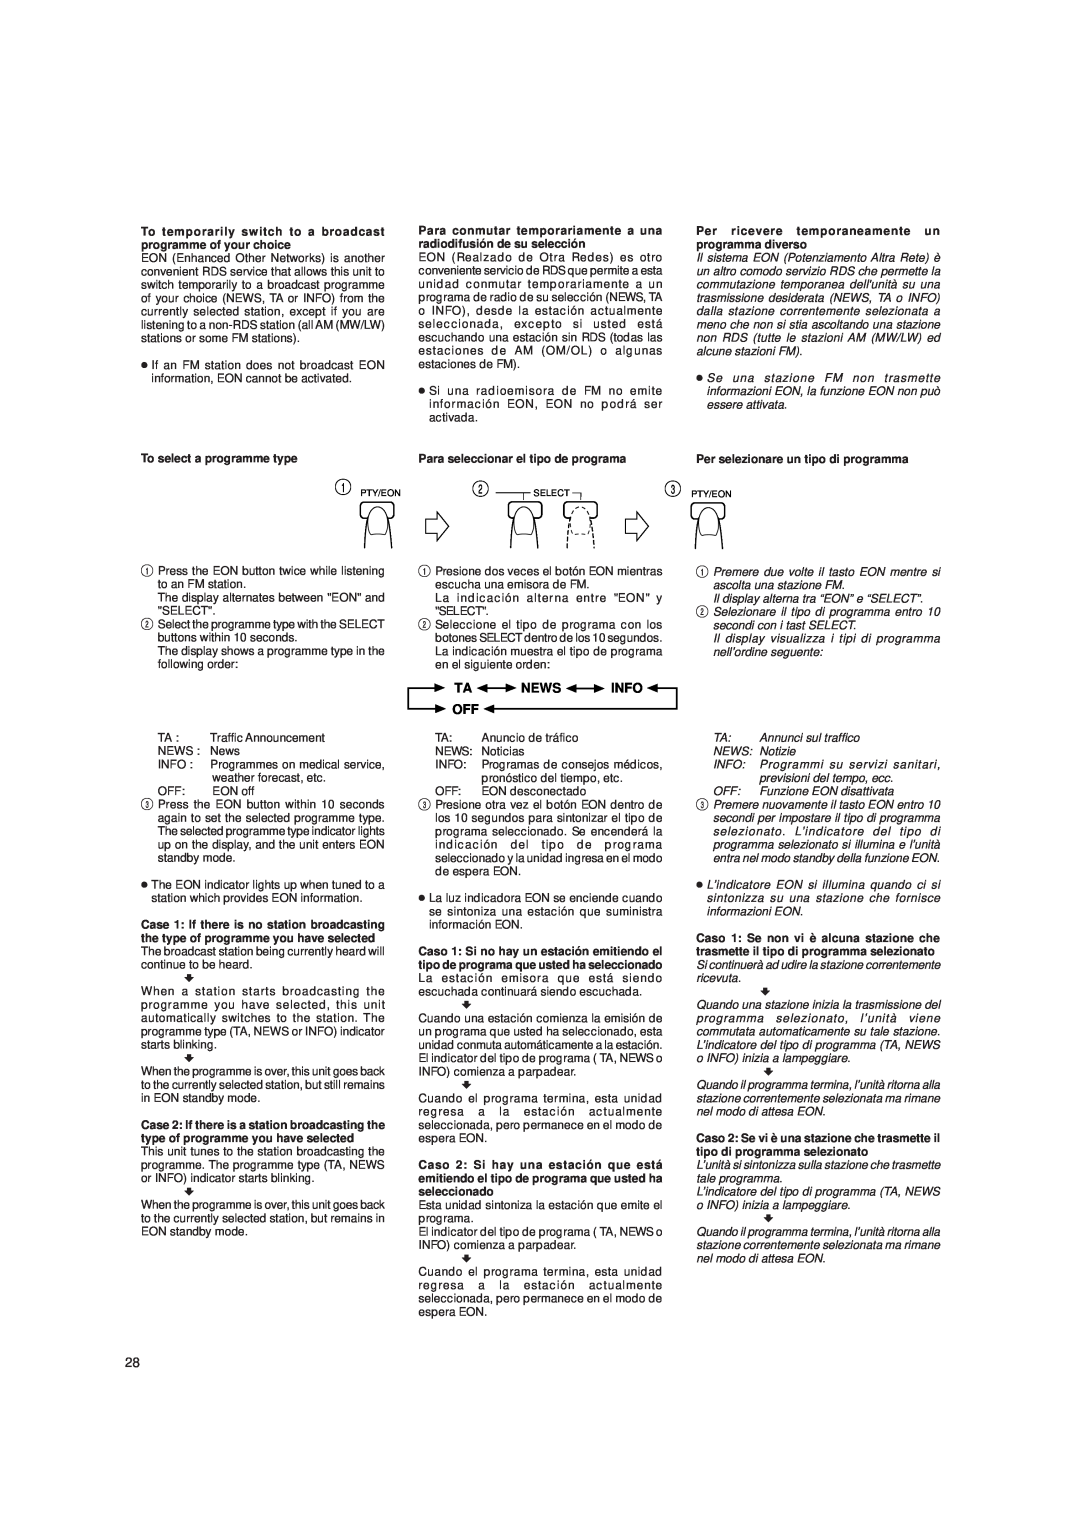 JVC LVT0059-001A, UX-T250R manual News, Info 